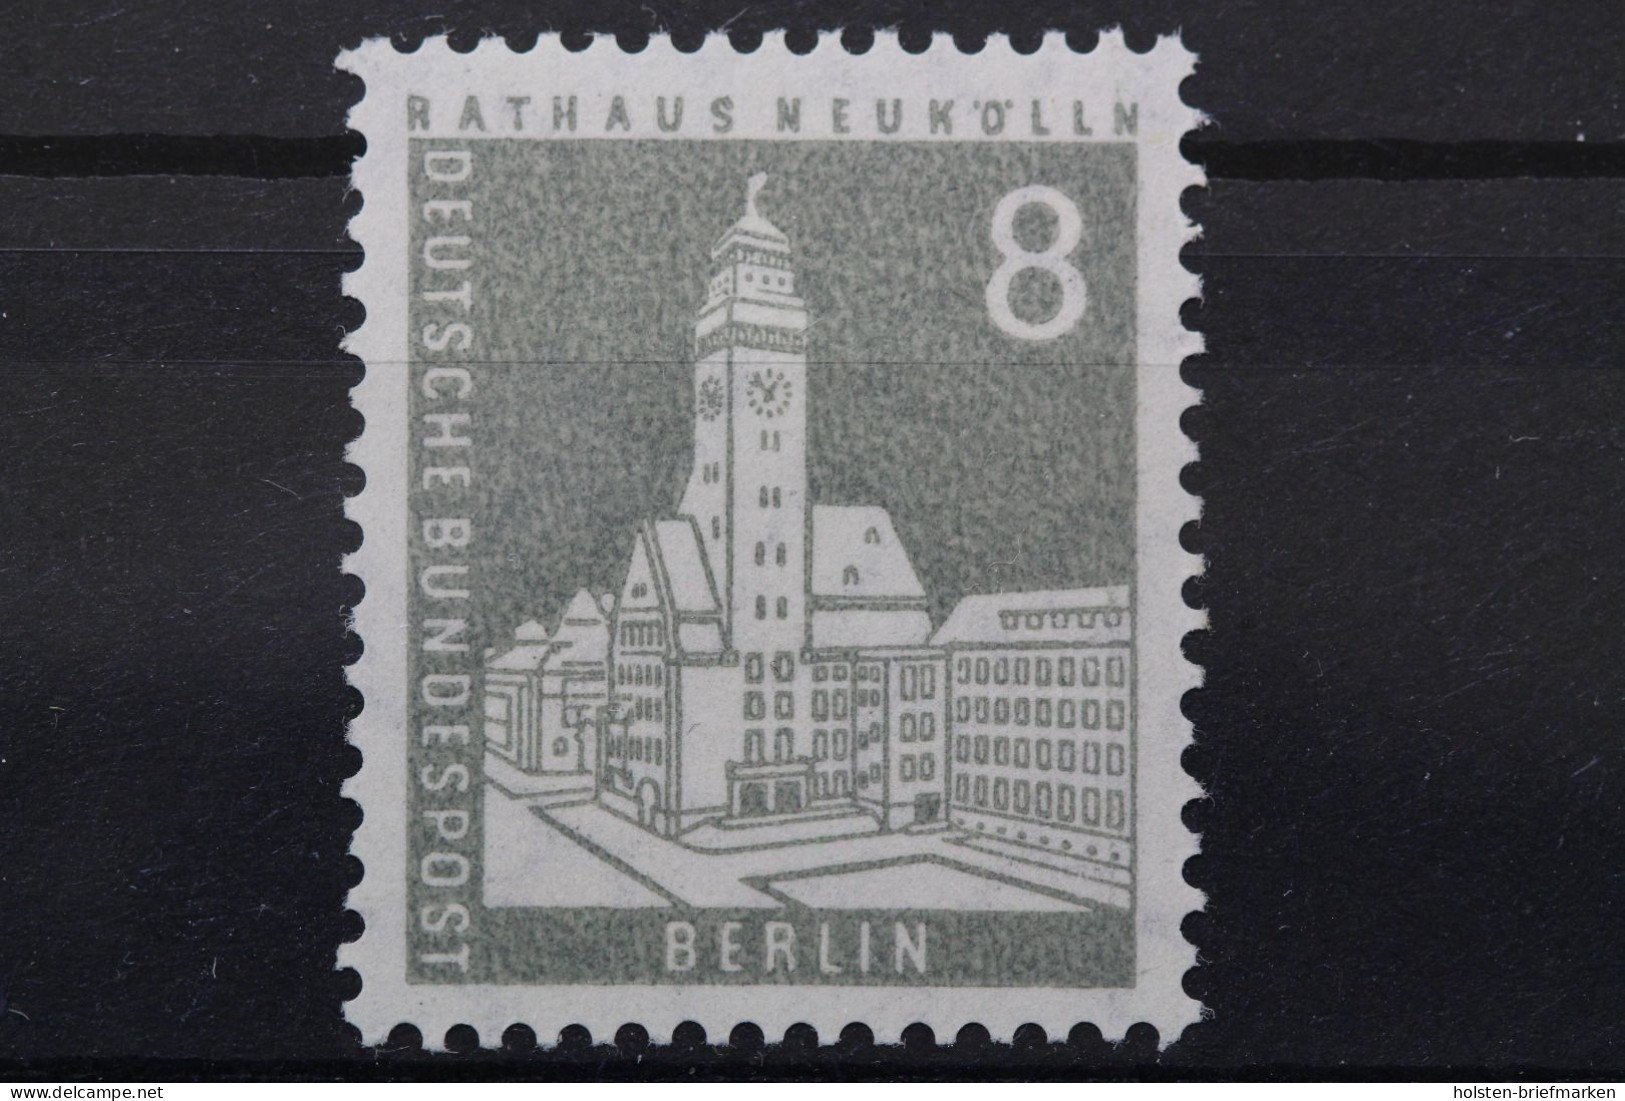 Berlin, MiNr. 143 W V R, Postfrisch - Roller Precancels